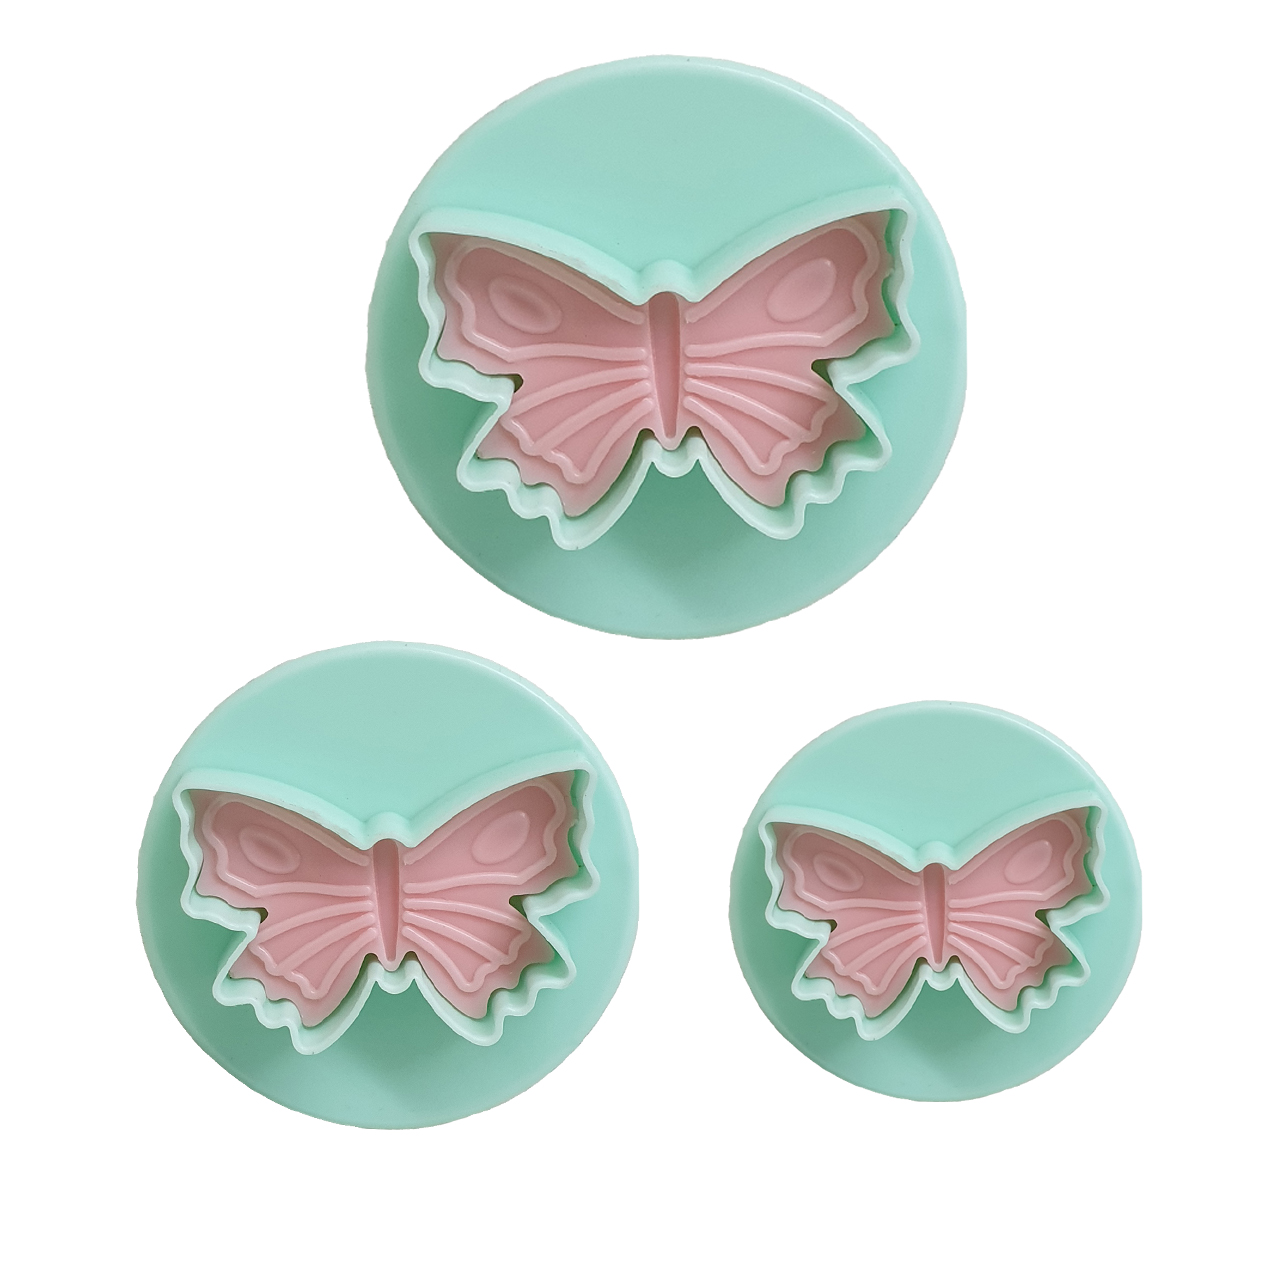 کاتر شیرینی مدل Butterfly-03 بسته 3 عددی